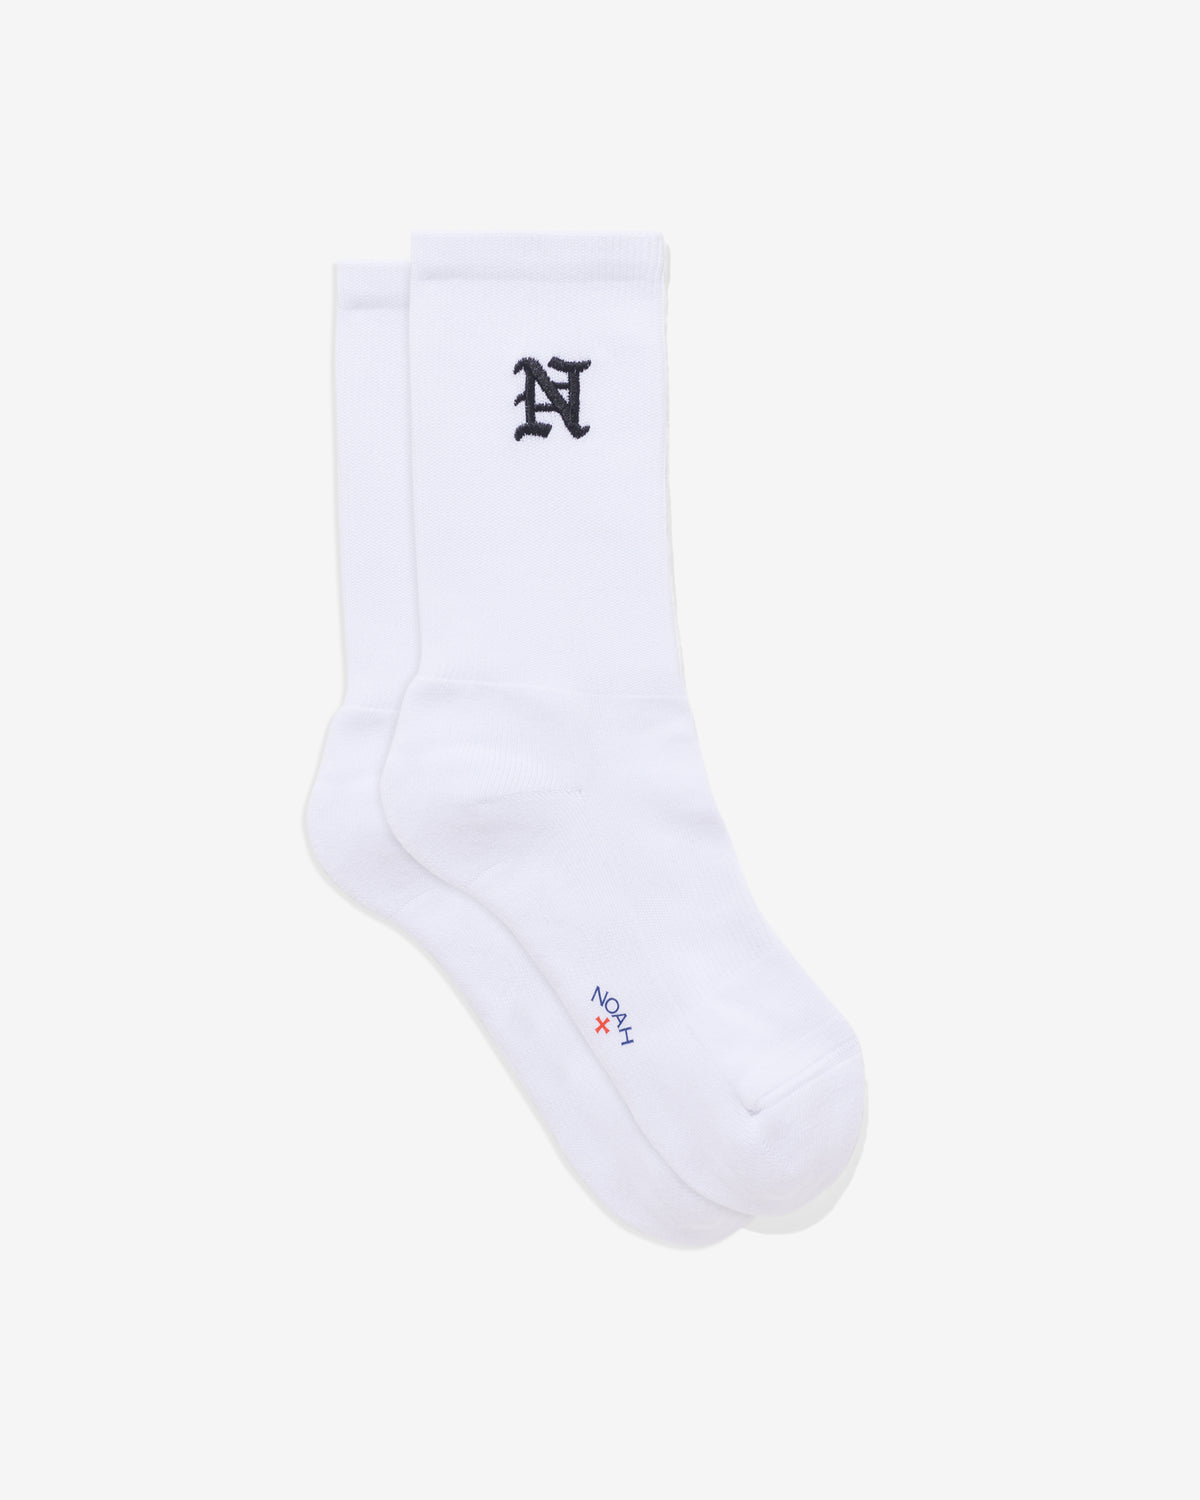 N Logo Sock